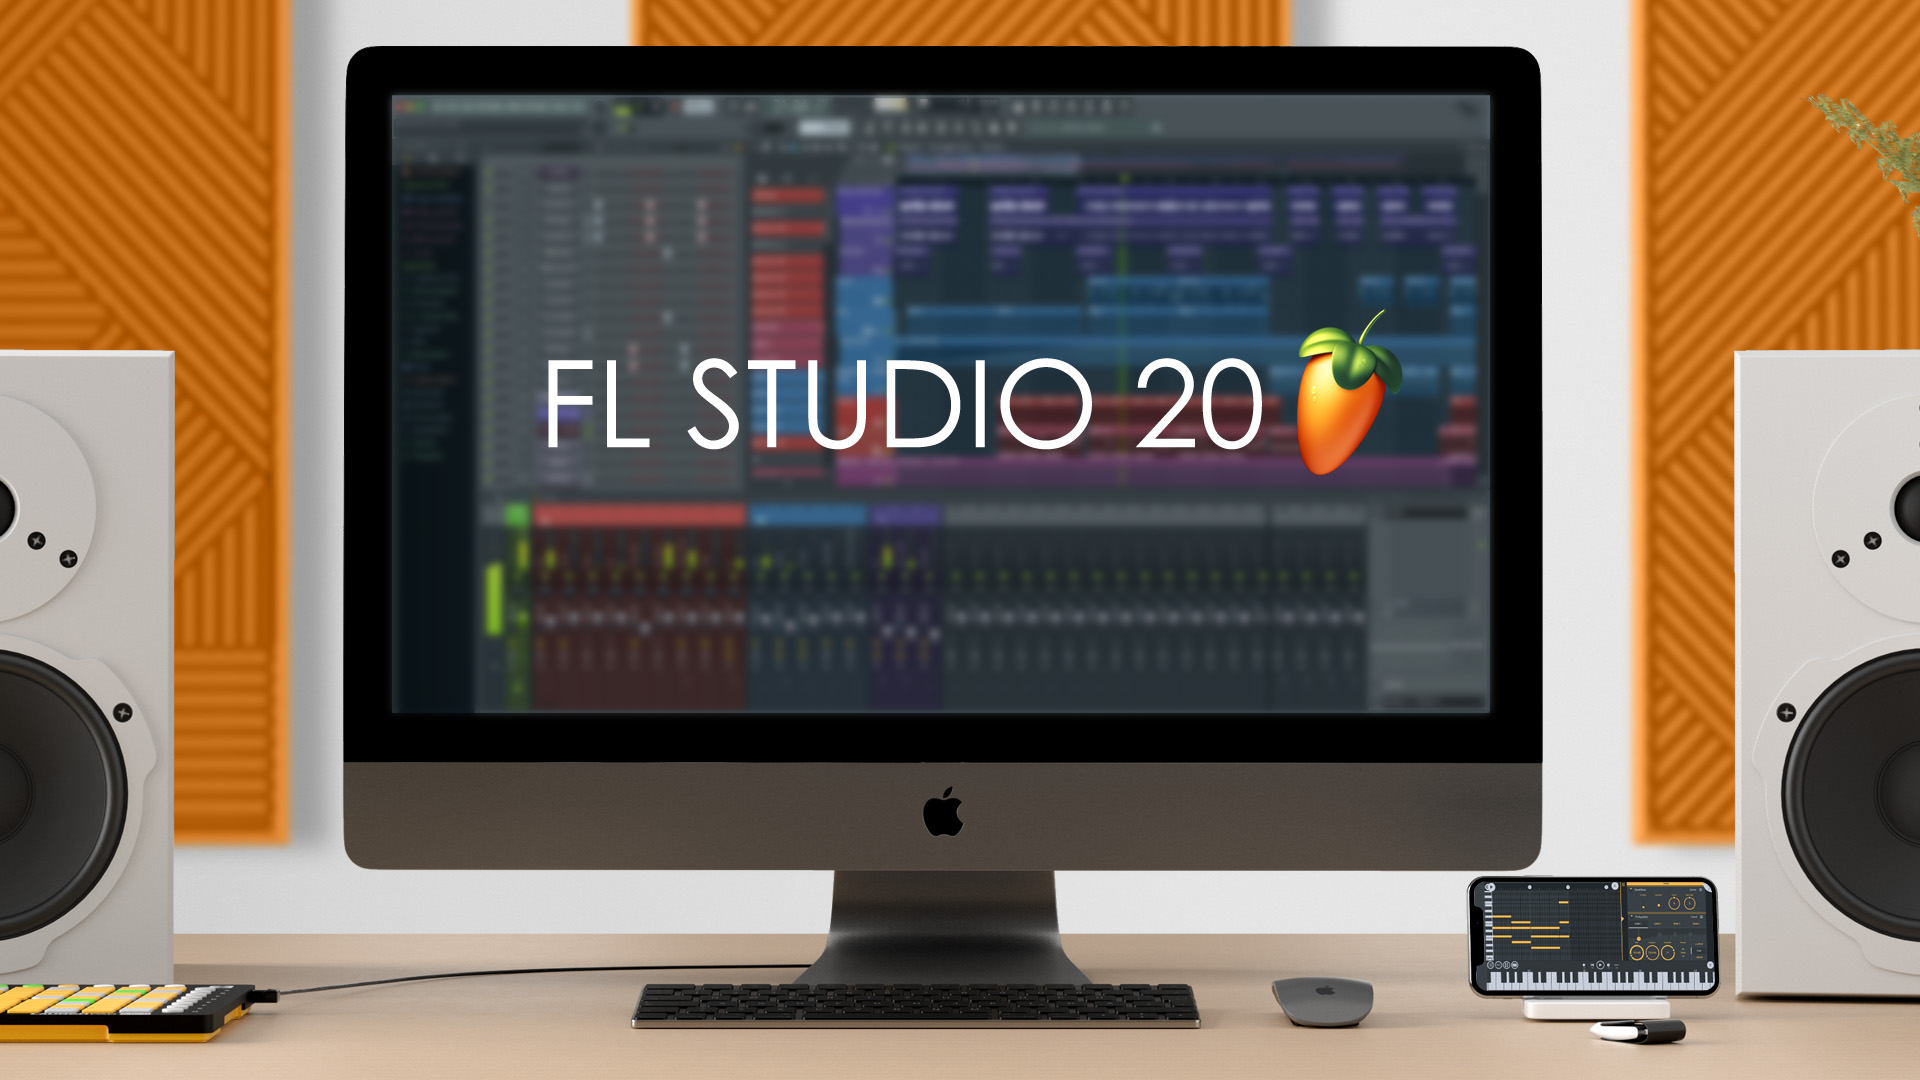 FL STUDIO 20 Released! - FL Studio